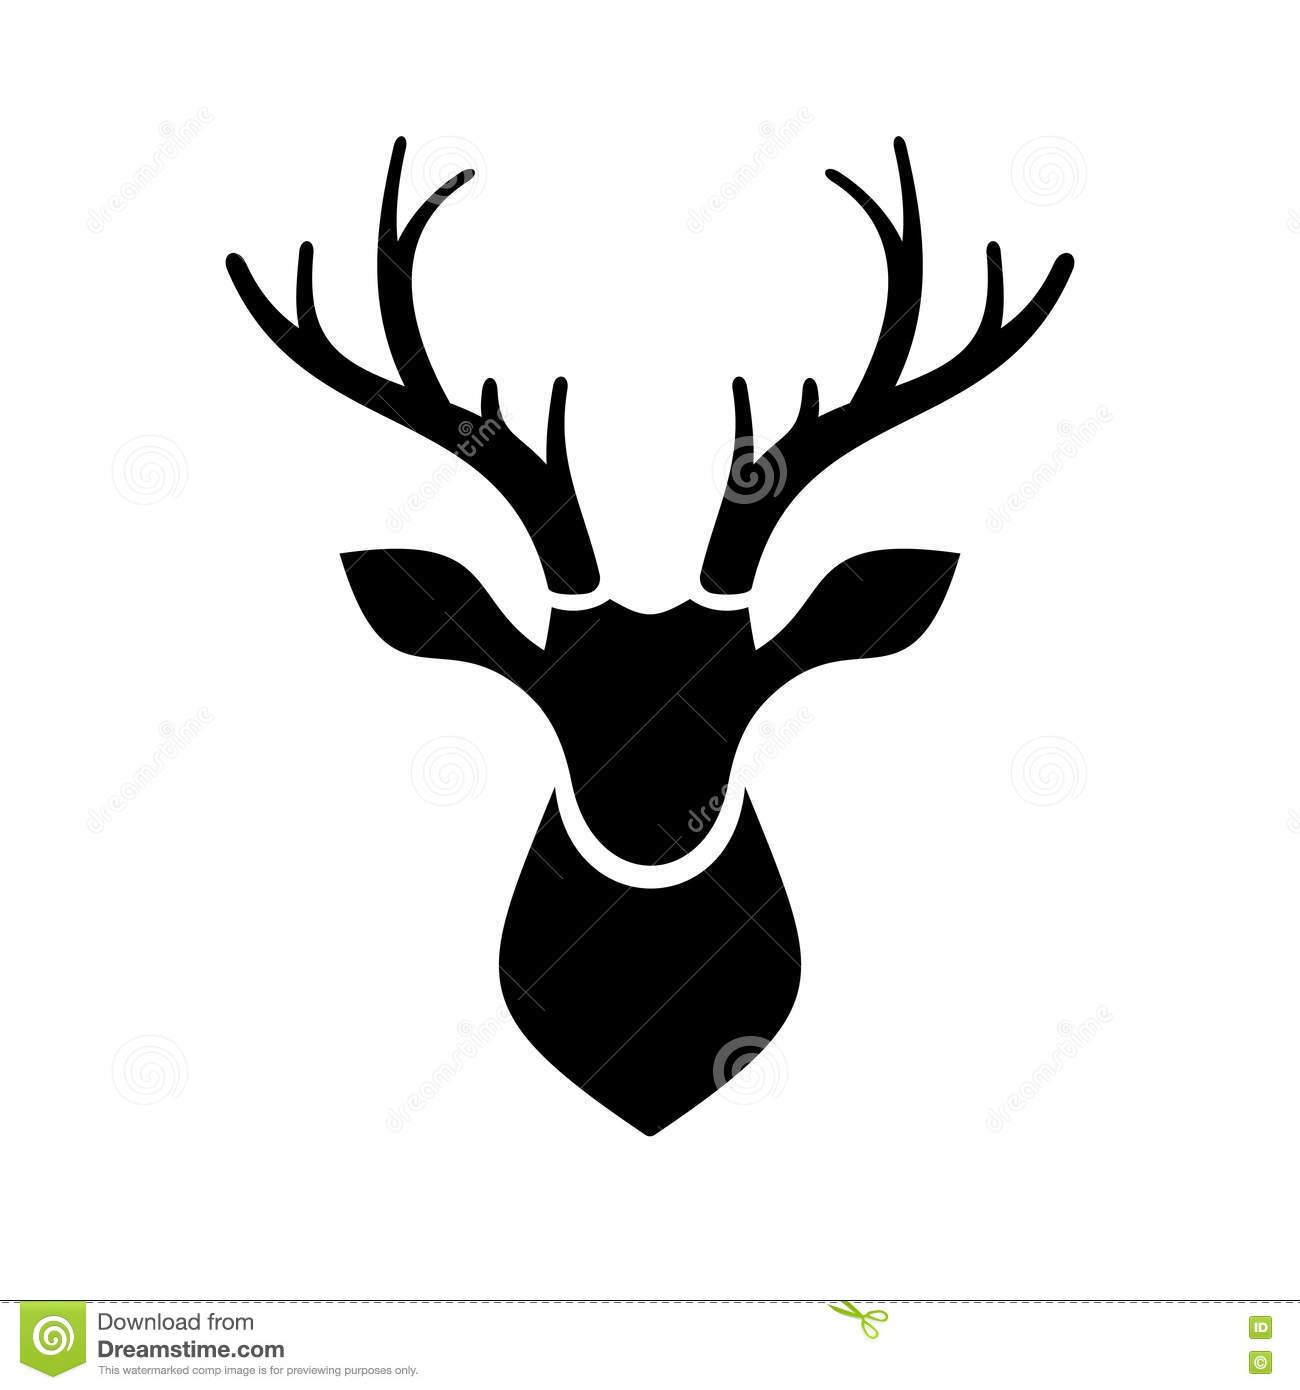 Deer Head Logo